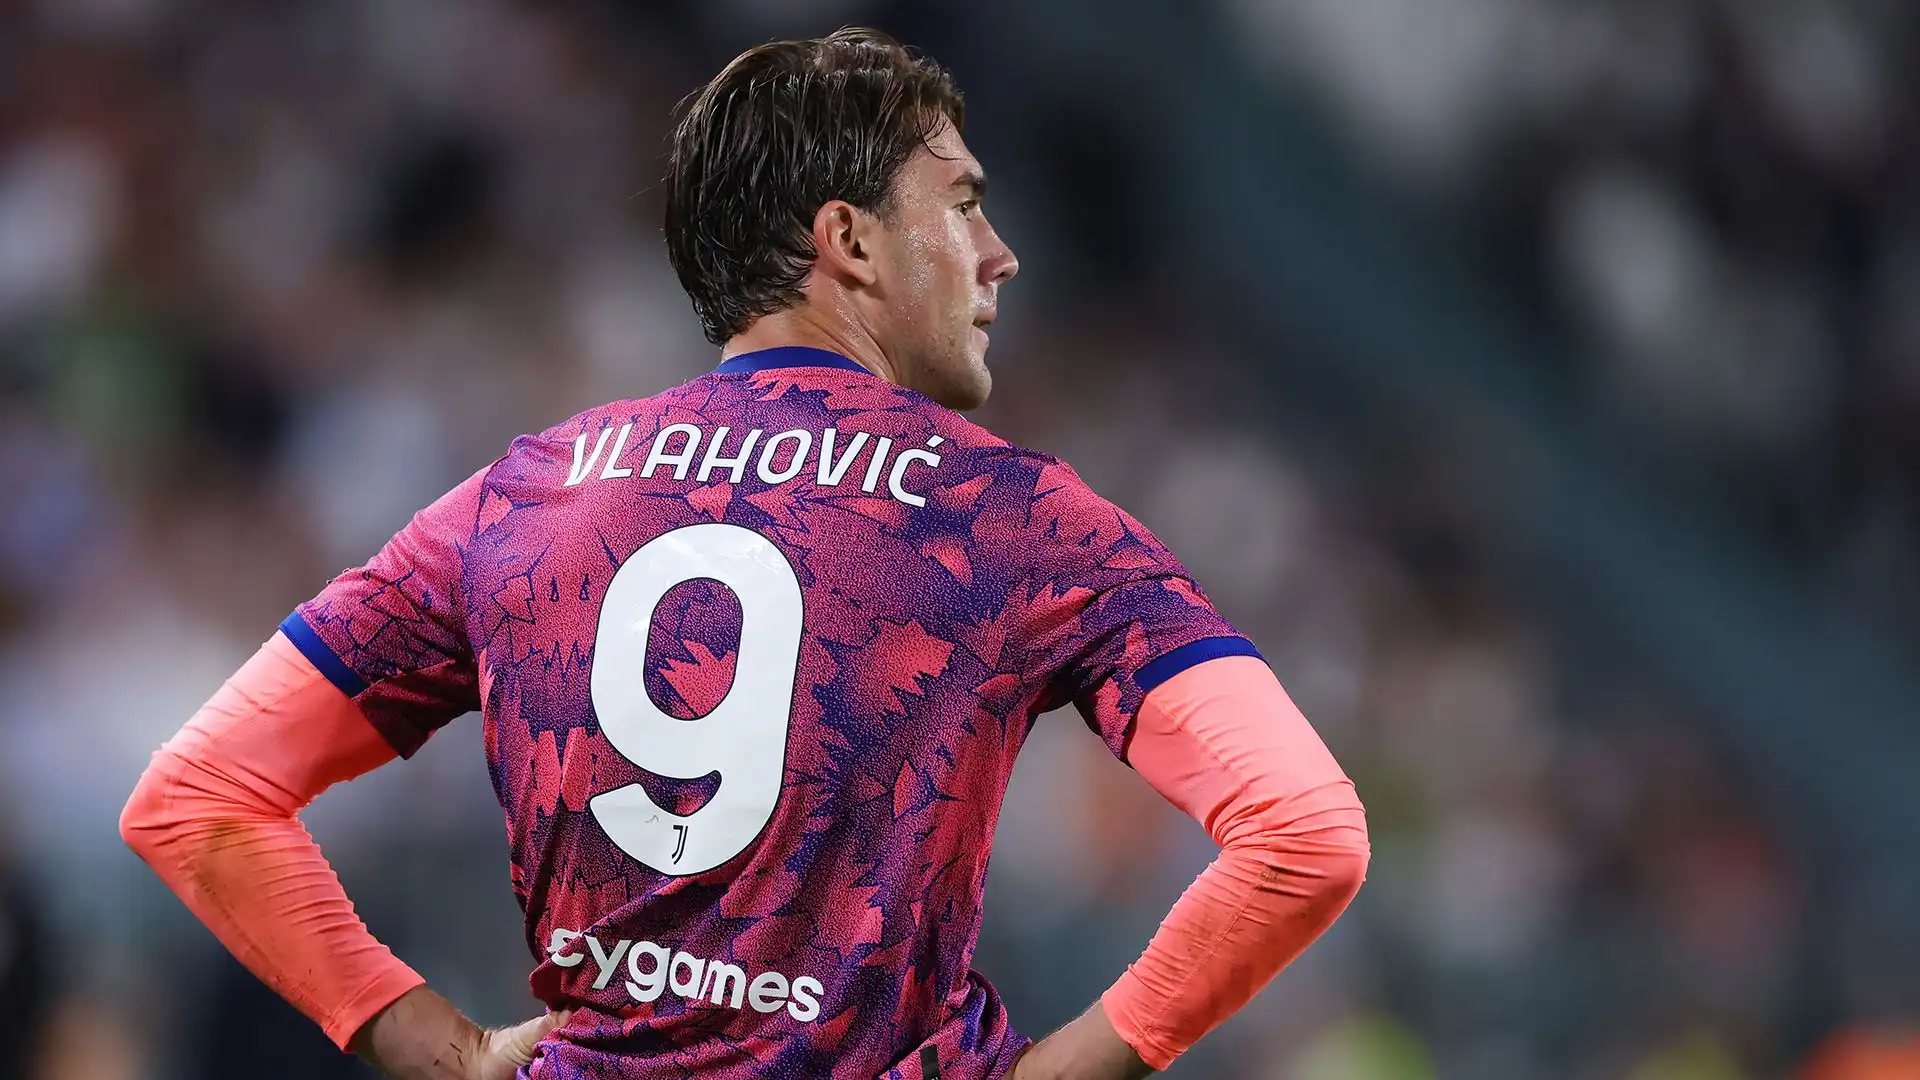 La Juventus venderà Vlahovic al miglior offerente